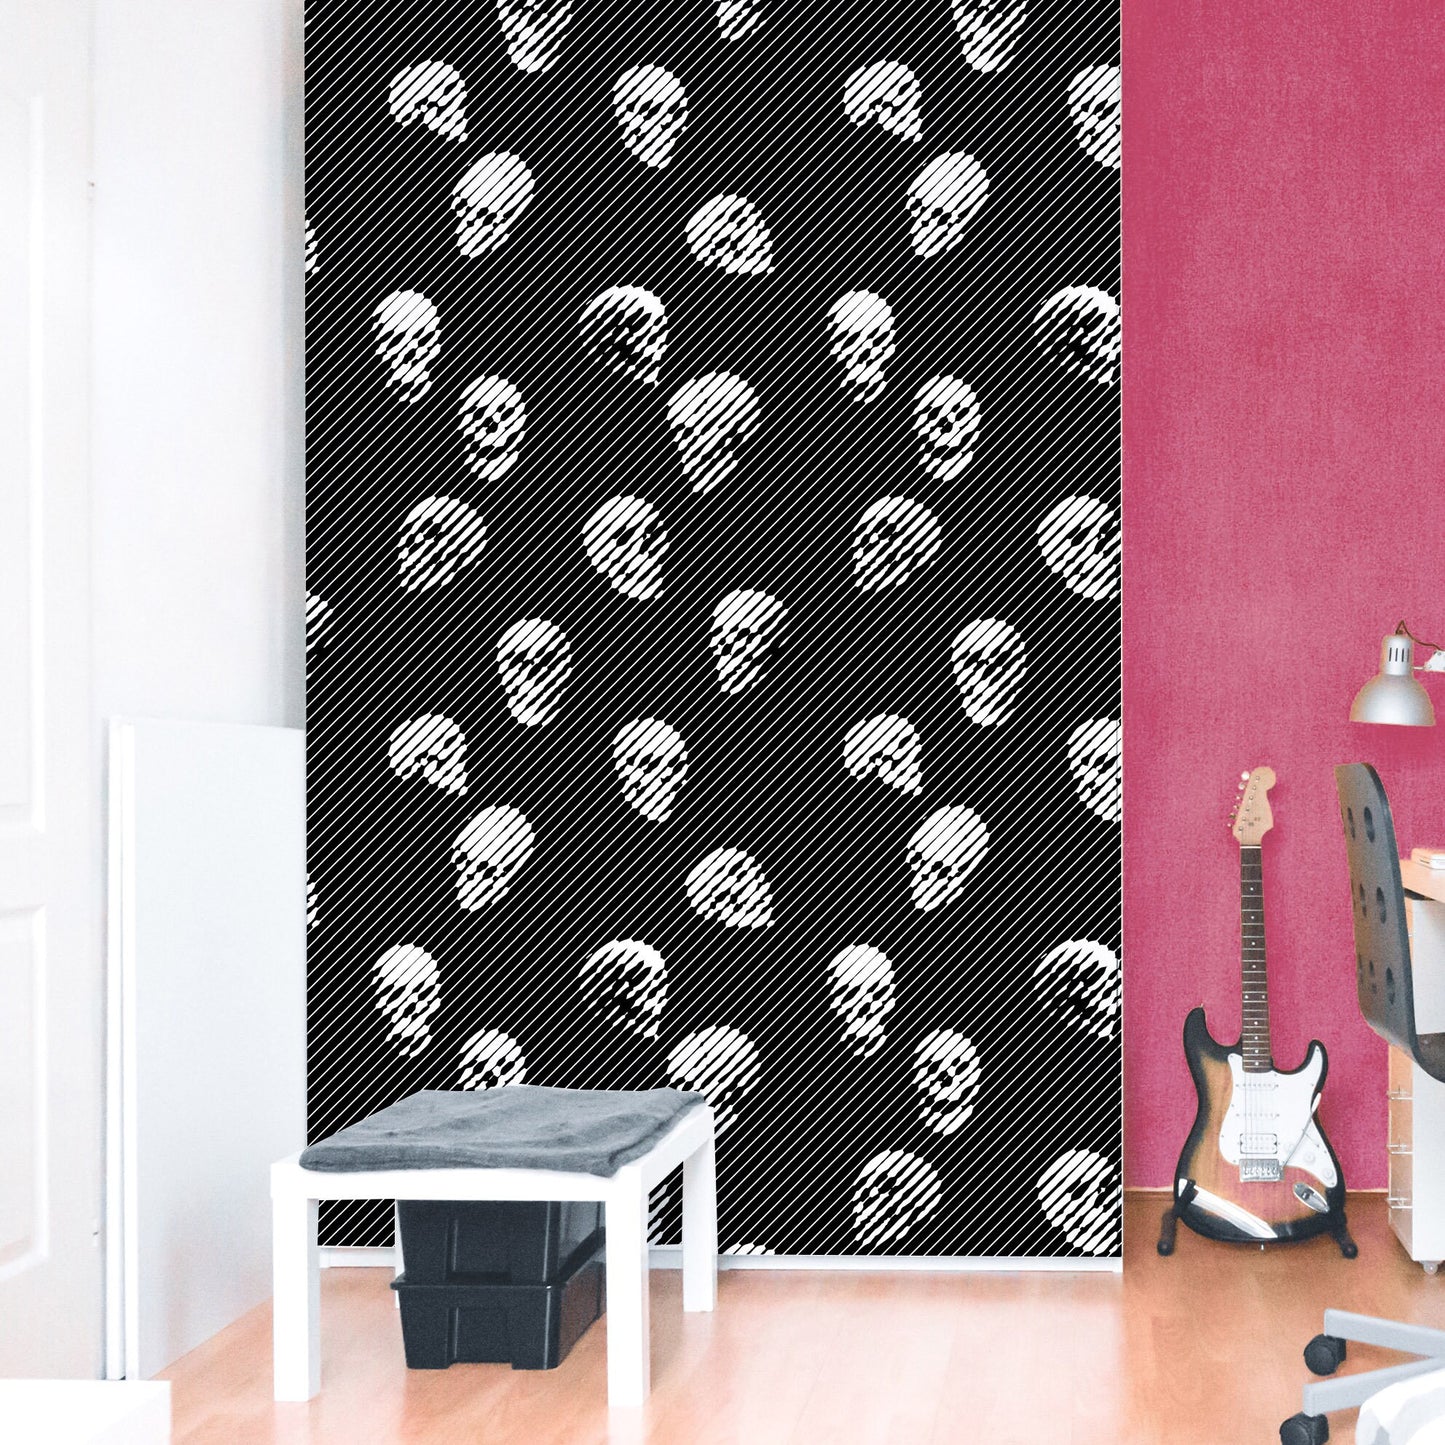 Gothic Skull Wallpaper Home Decor, Black And White Skull Art Print Traditional Wallpaper, Abstract Sugar Skull Modern Wallpaper Wall Decor